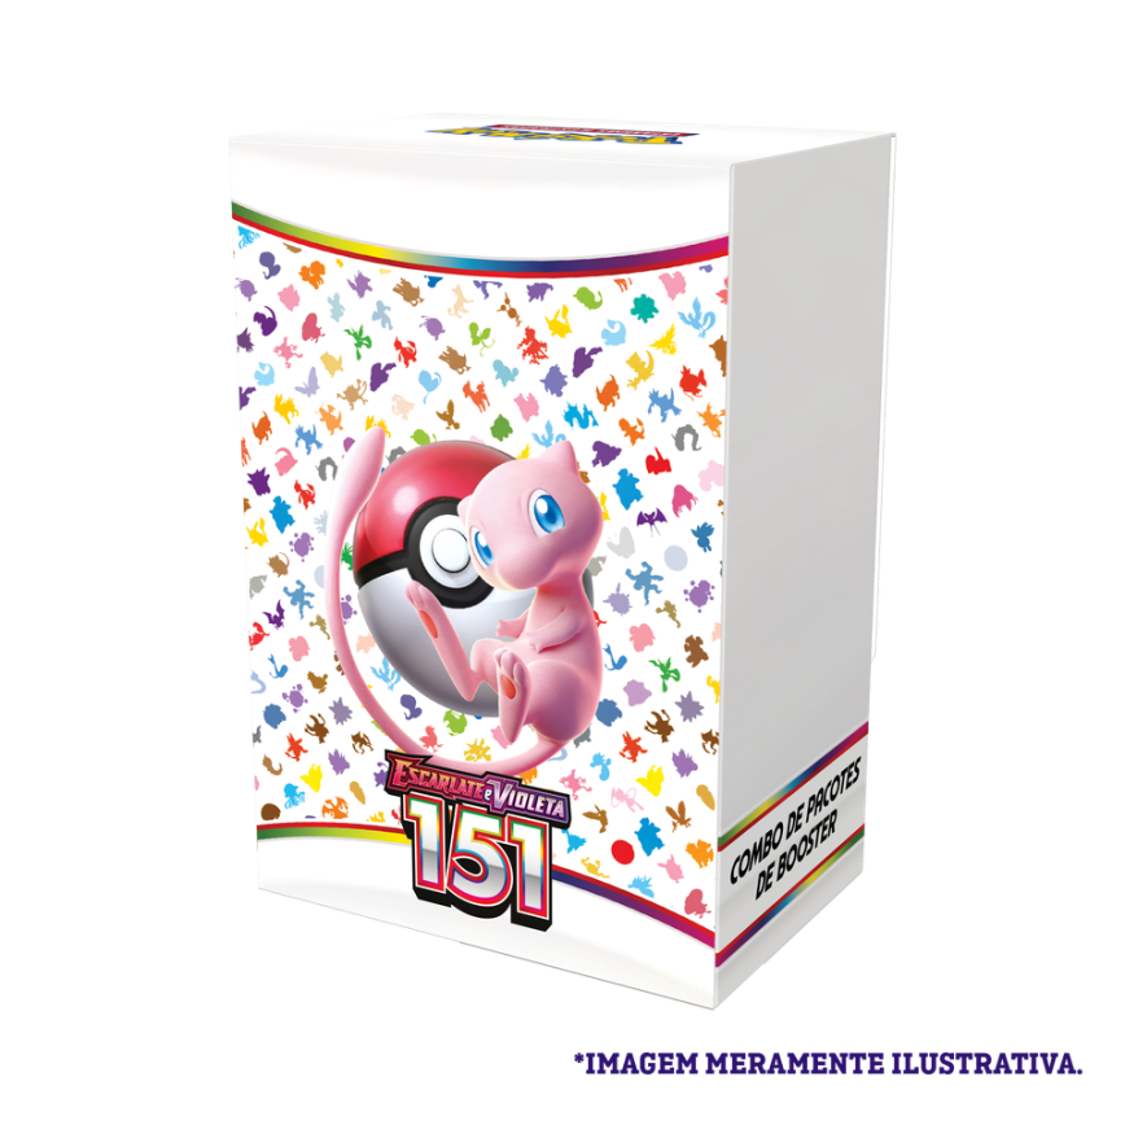 Pokémon 3.5 Scarlet & Violet 151: Exposição de mini latas